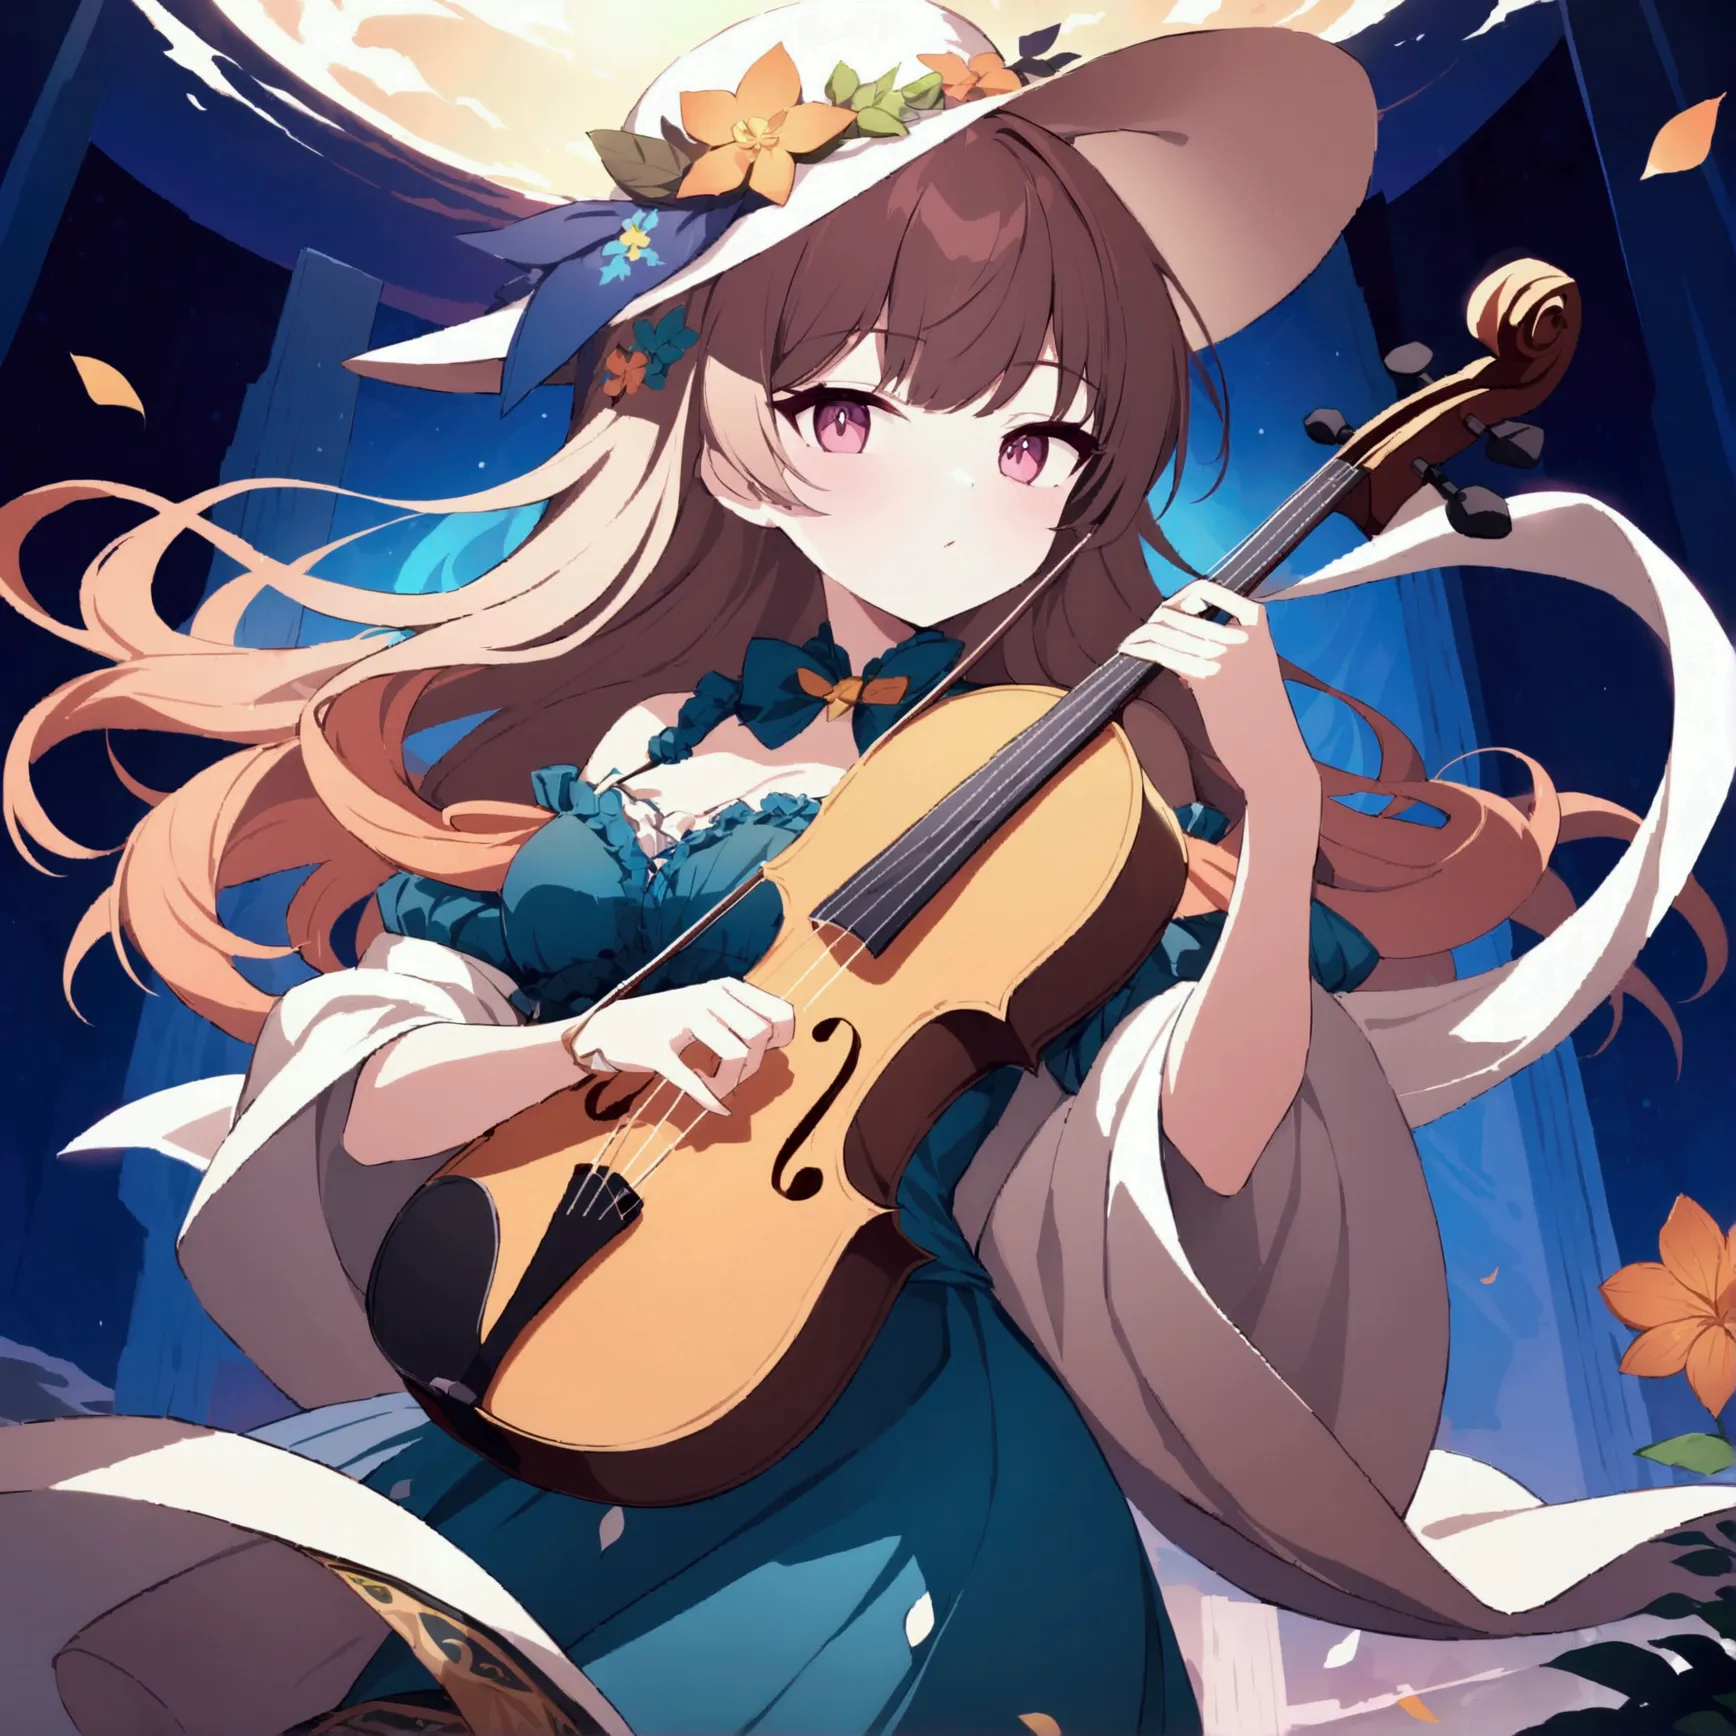  holding a violin, wearing big flower hat
